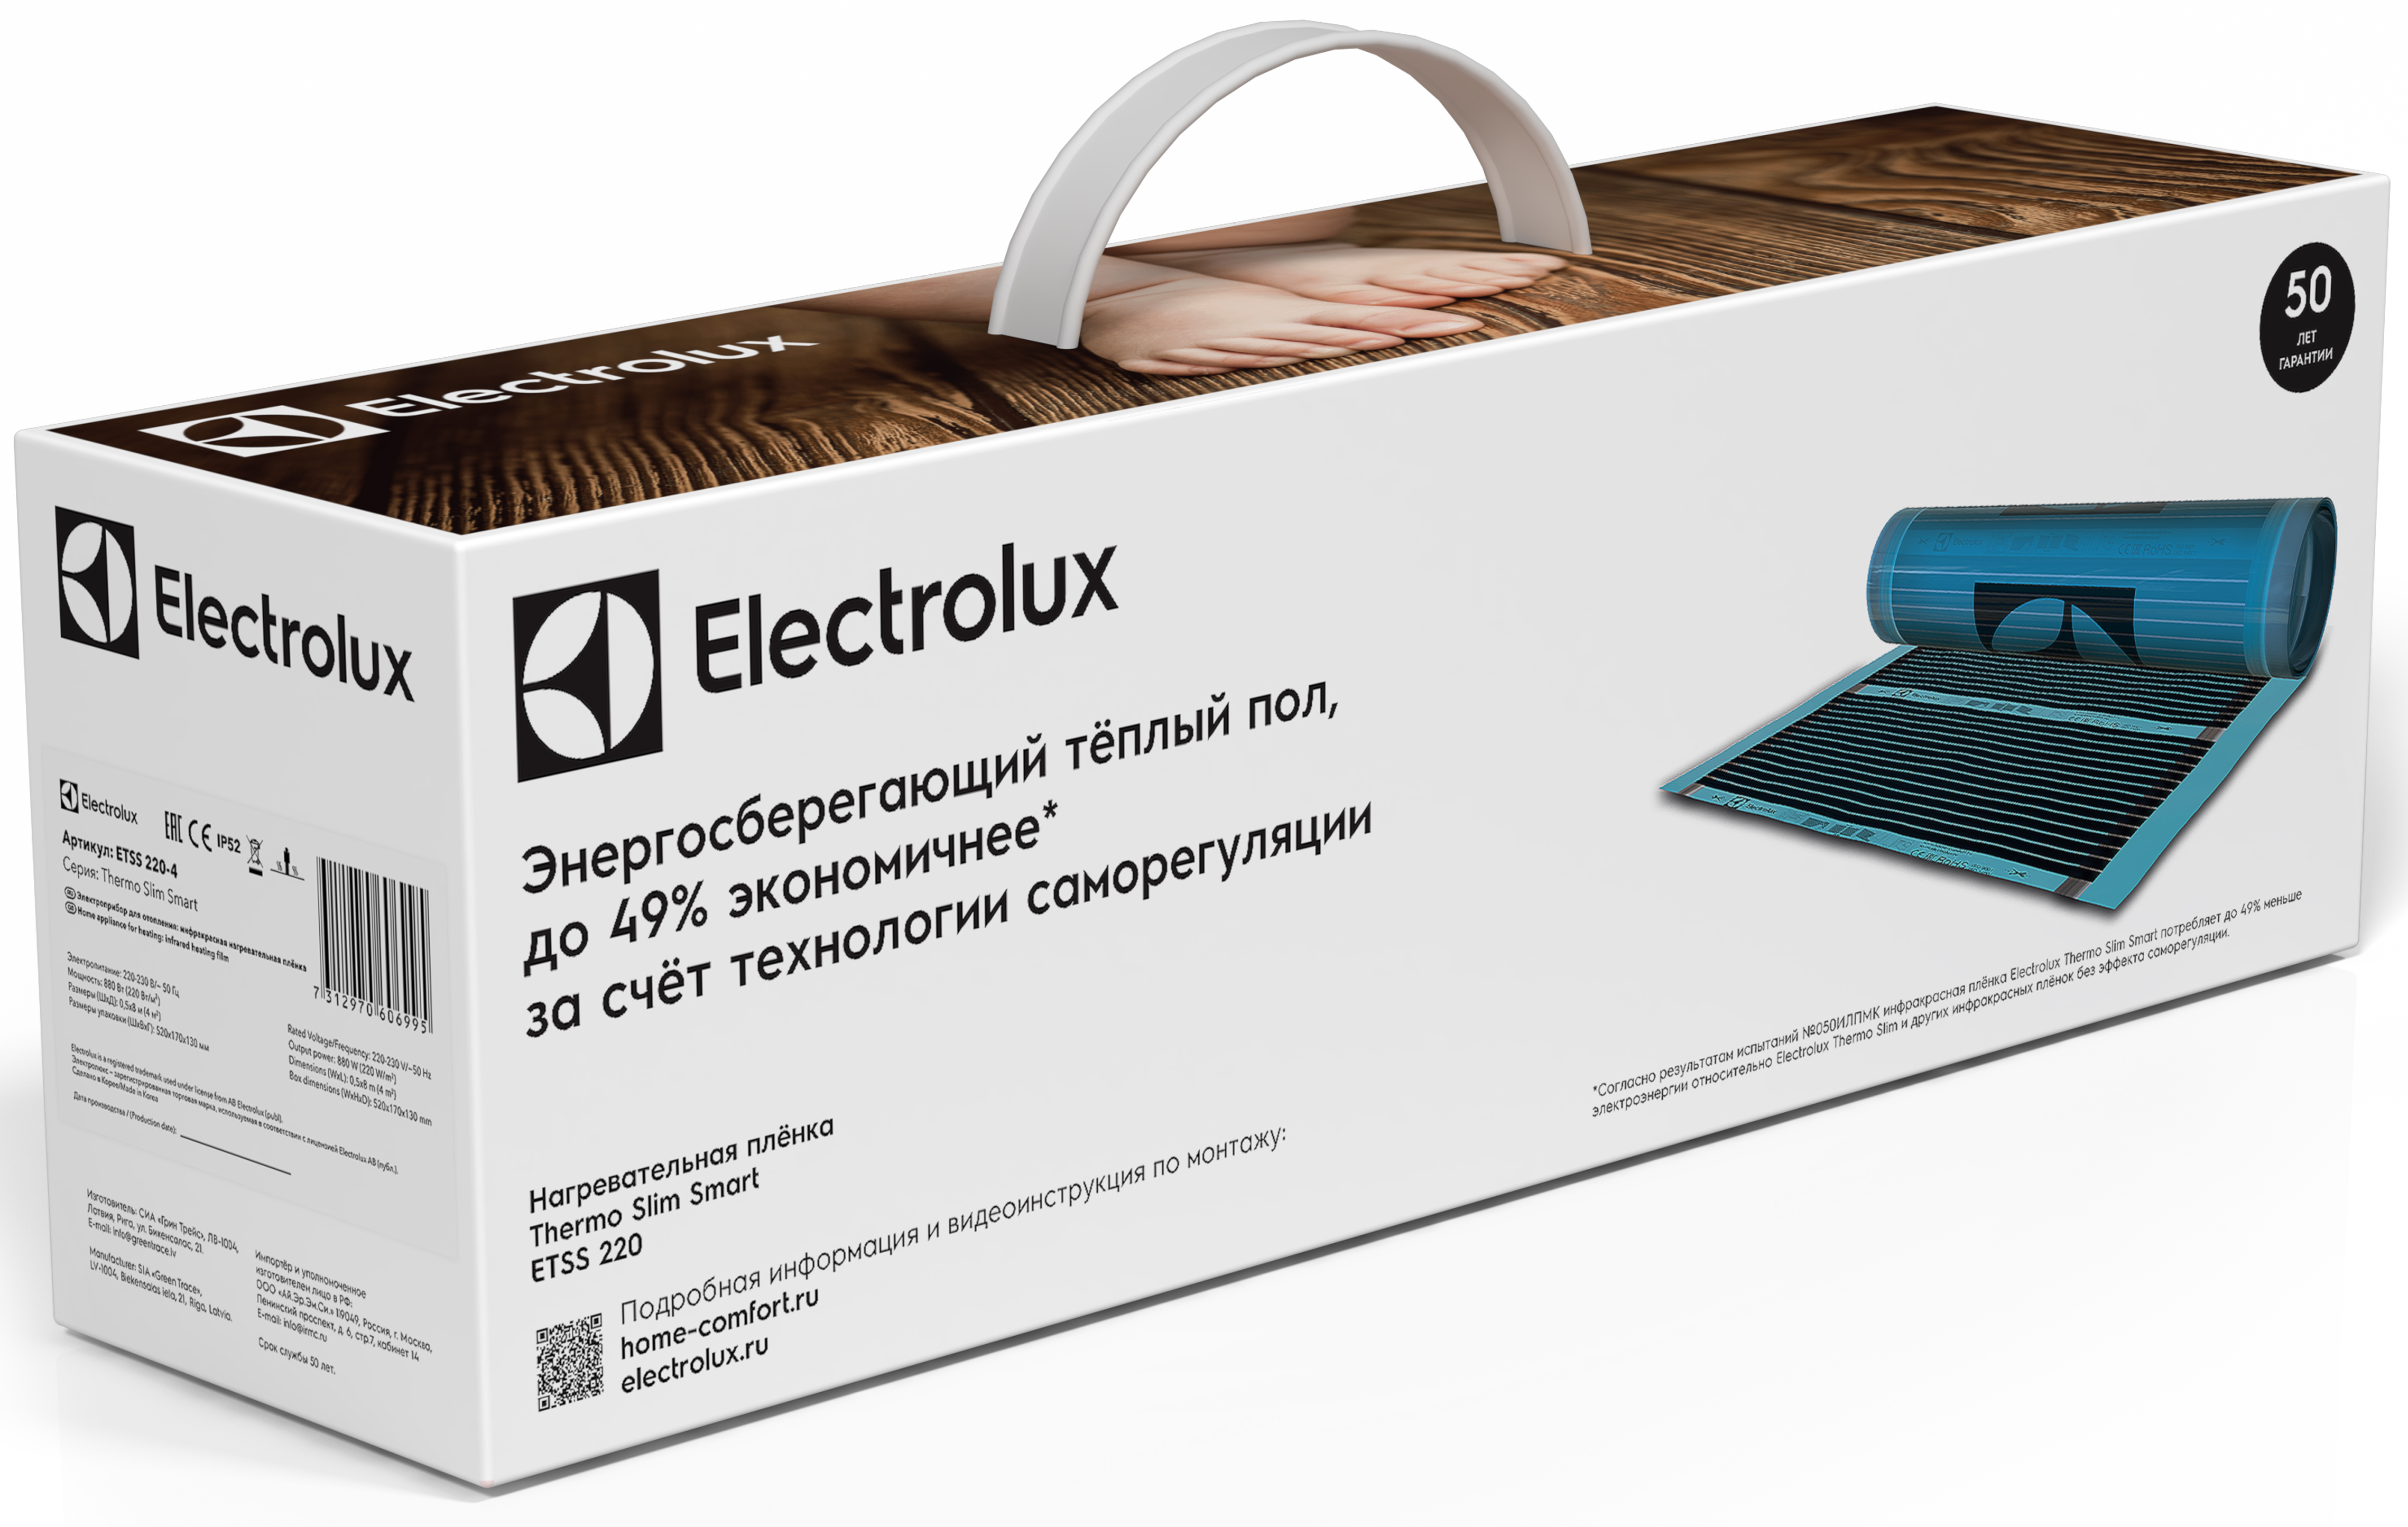 Теплый пол Electrolux под паркет Electrolux Thermo Slim Smart ETSS 220-6